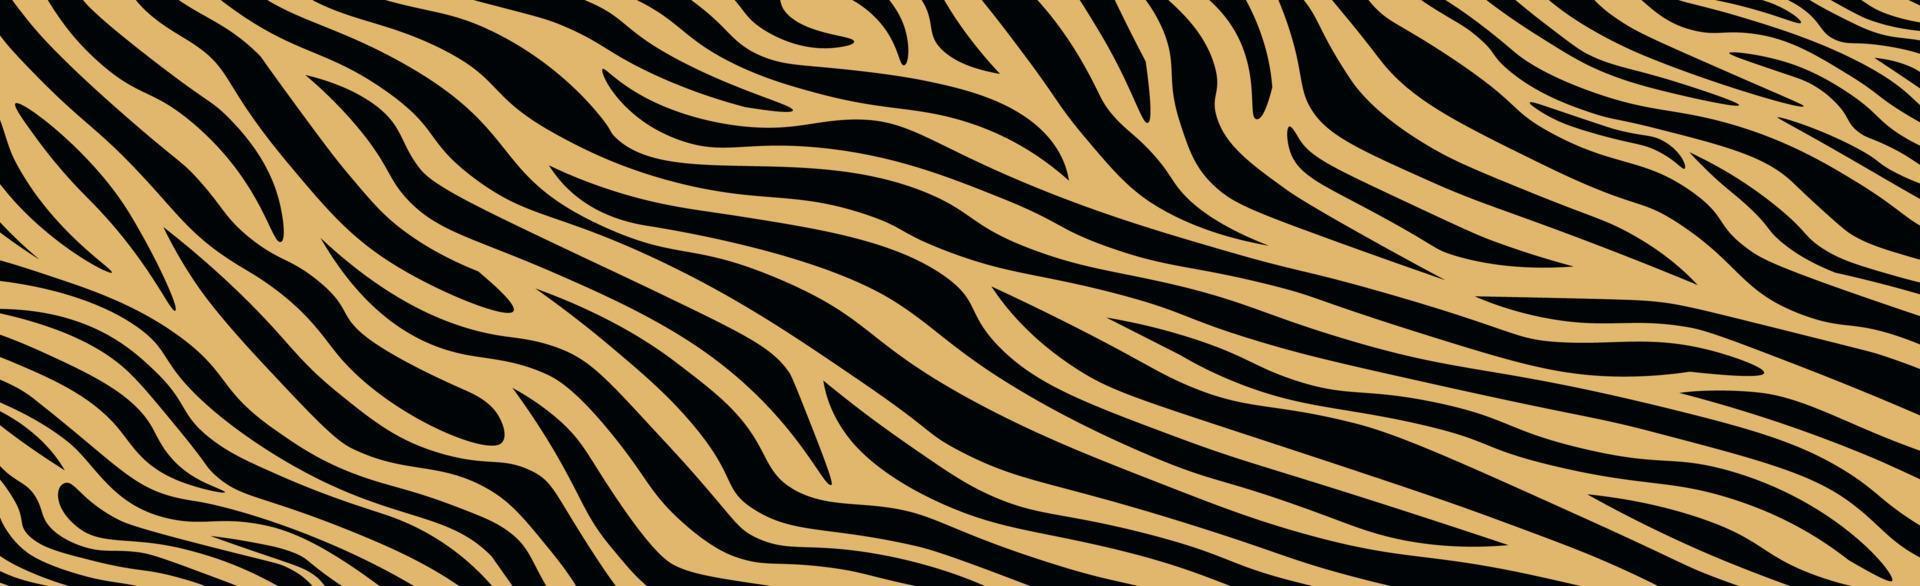 texture panoramica pelle di zebra insieme di linee caotiche - vettore